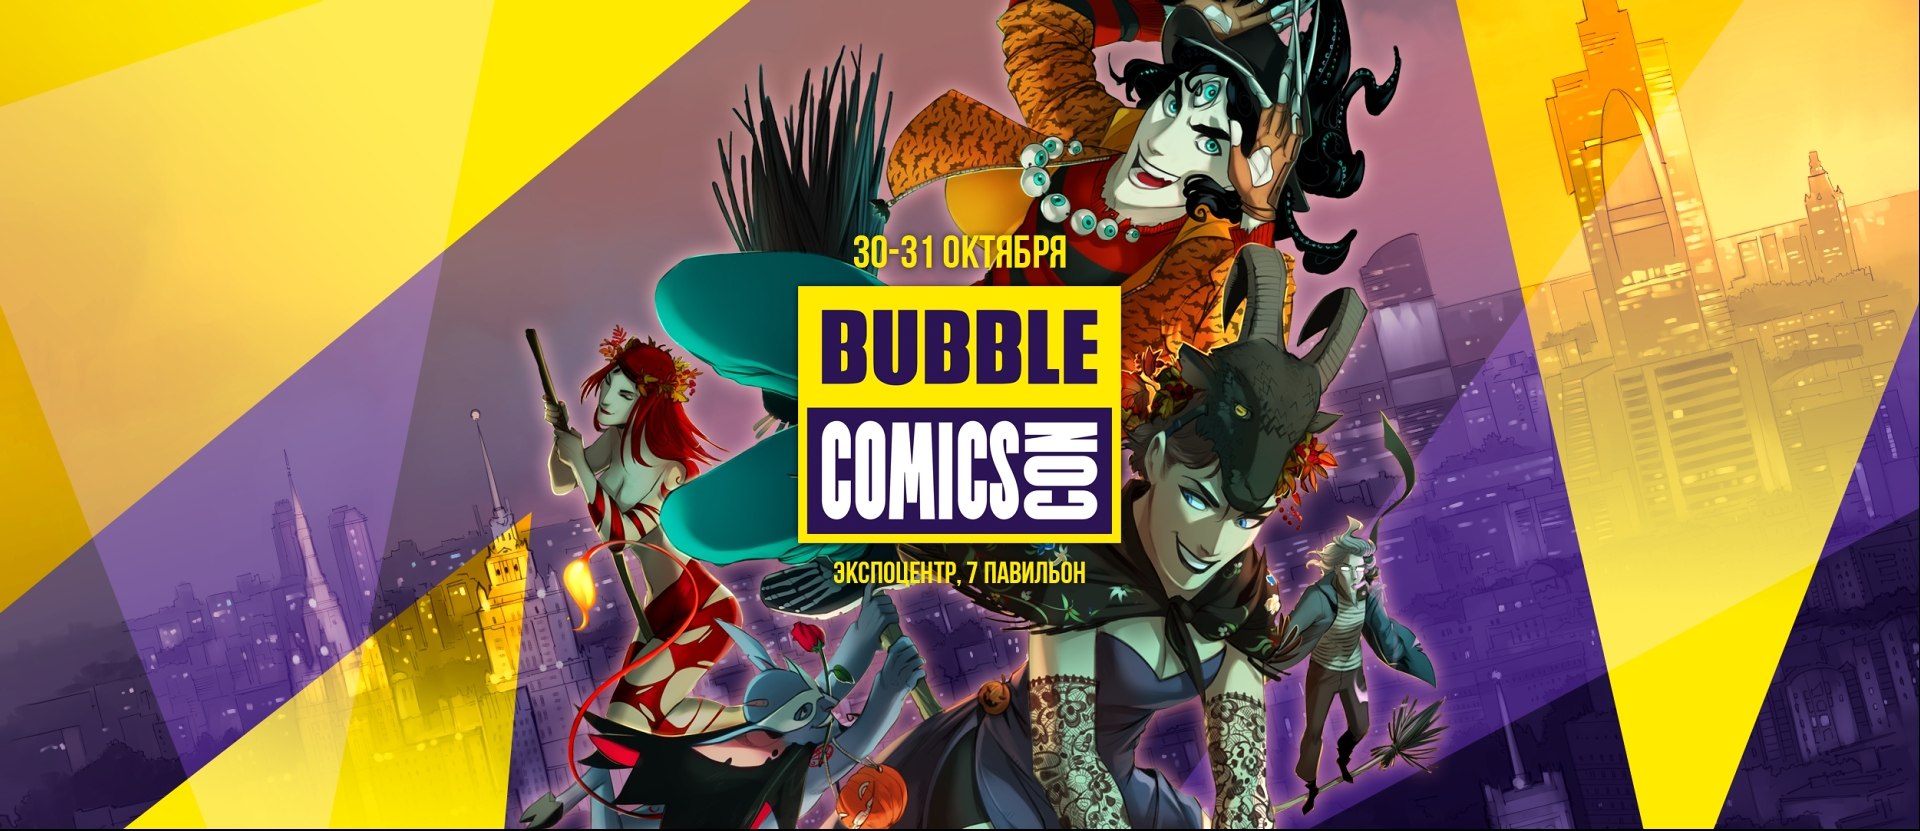 BUBBLE Comics Con прогремит в Москве 30 и 31 октября!